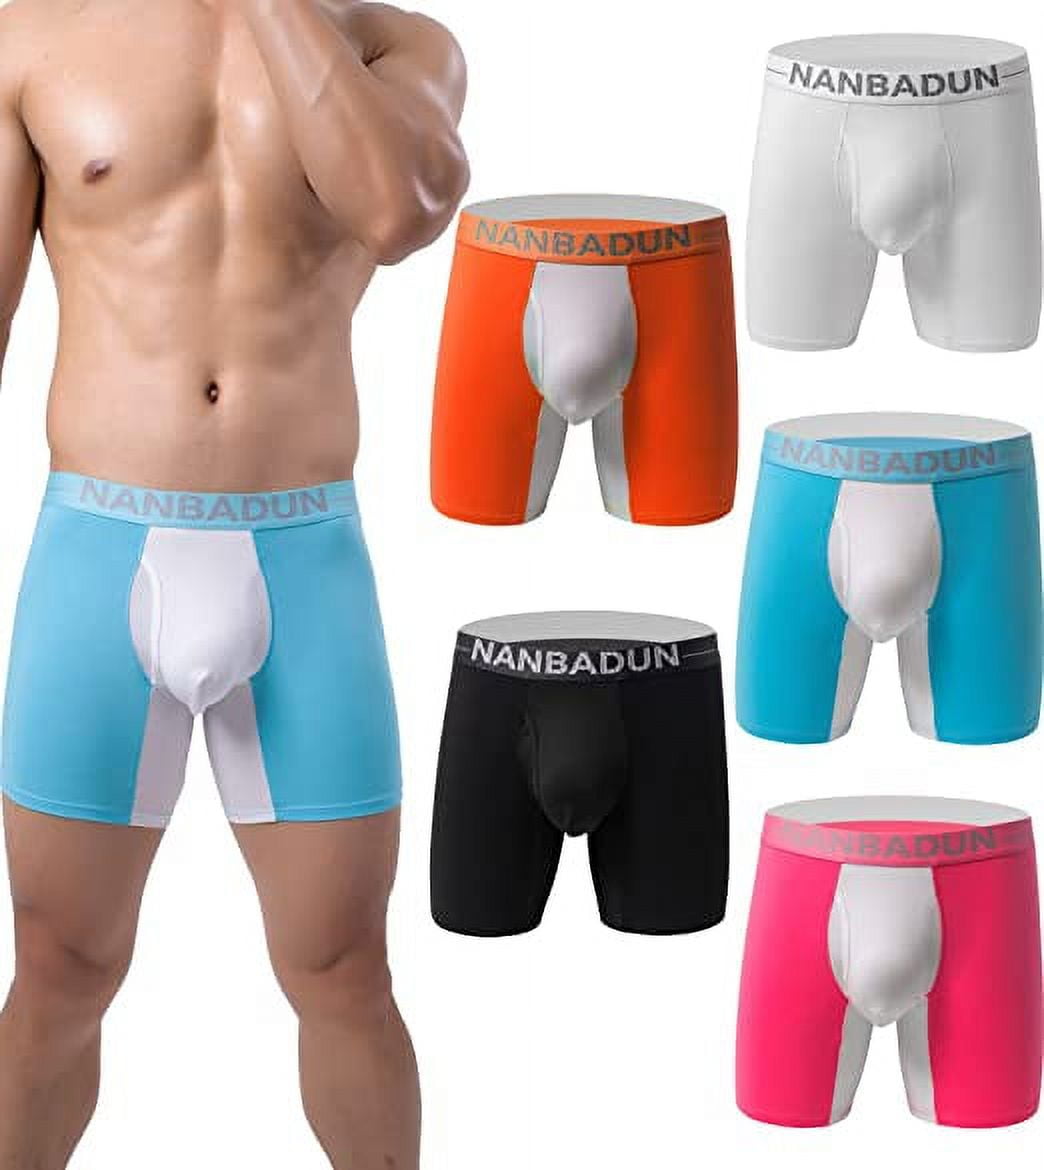 Tyhengta Men's Pouch Underwear Performance No Ride Up Boxer Briefs  N1128/Muti/5pack-L